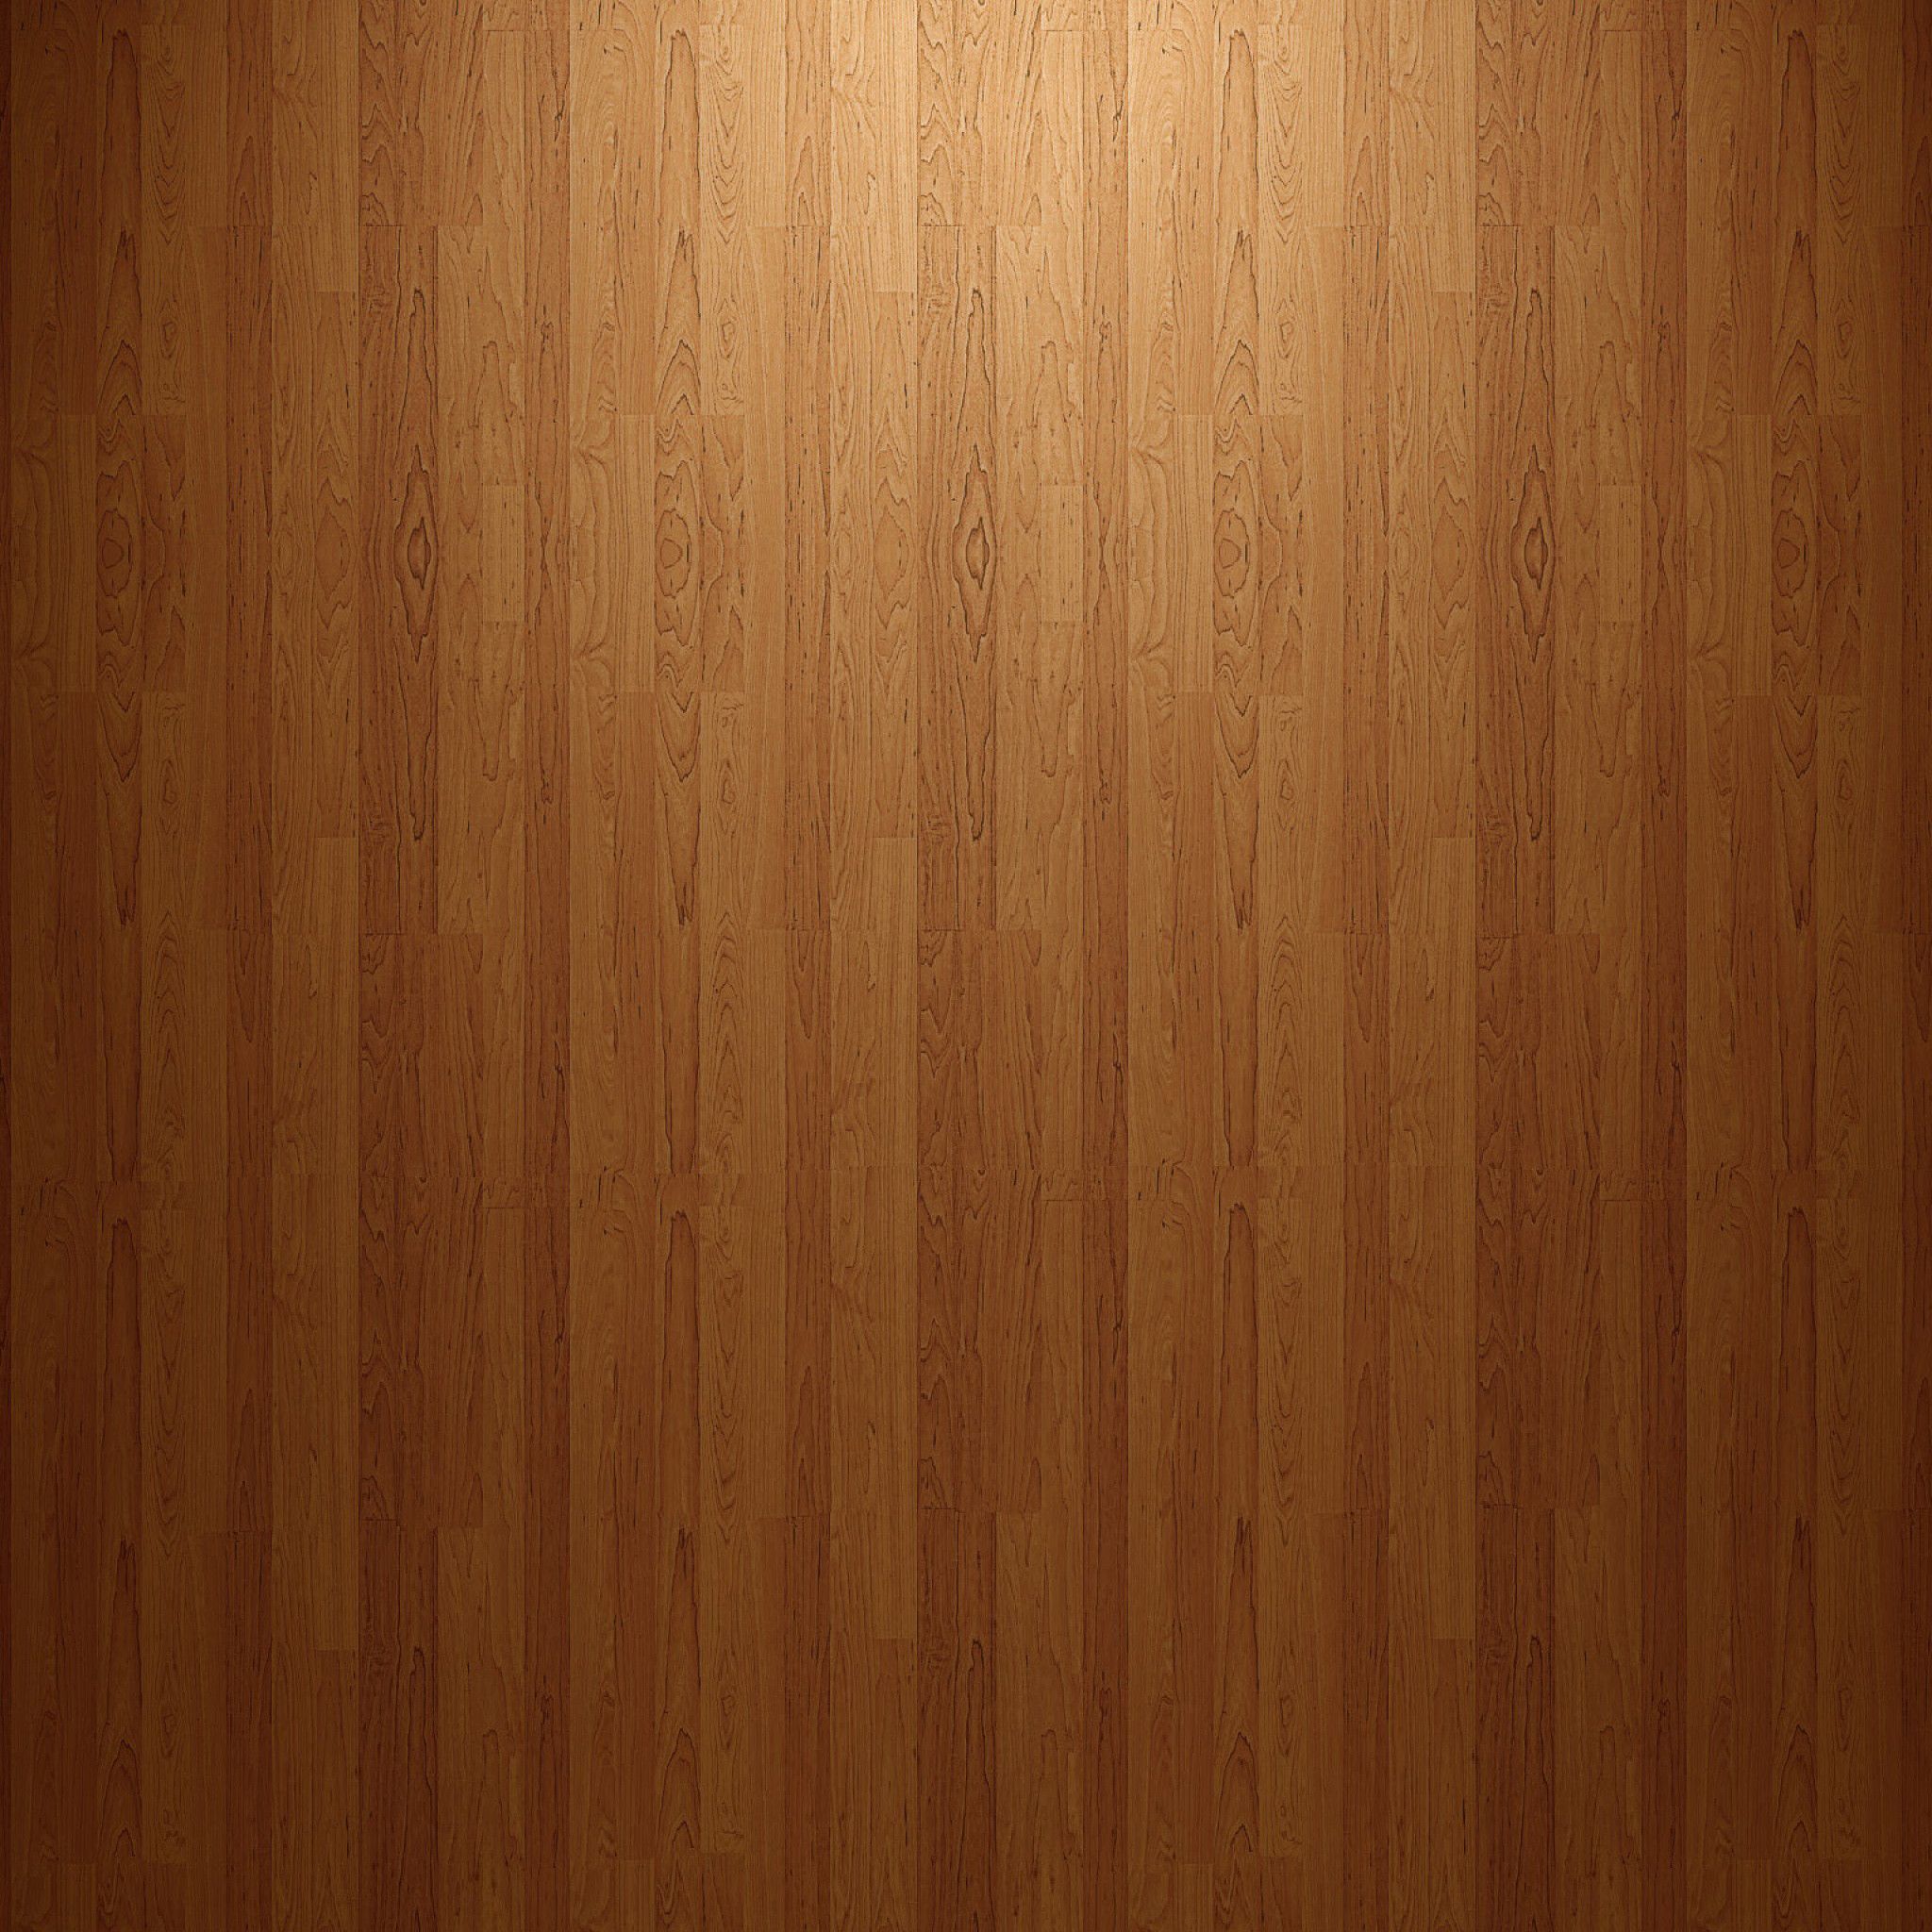 wood panel ipad 4 wallpaper ilikewallpaper com ipad wallpapers ...